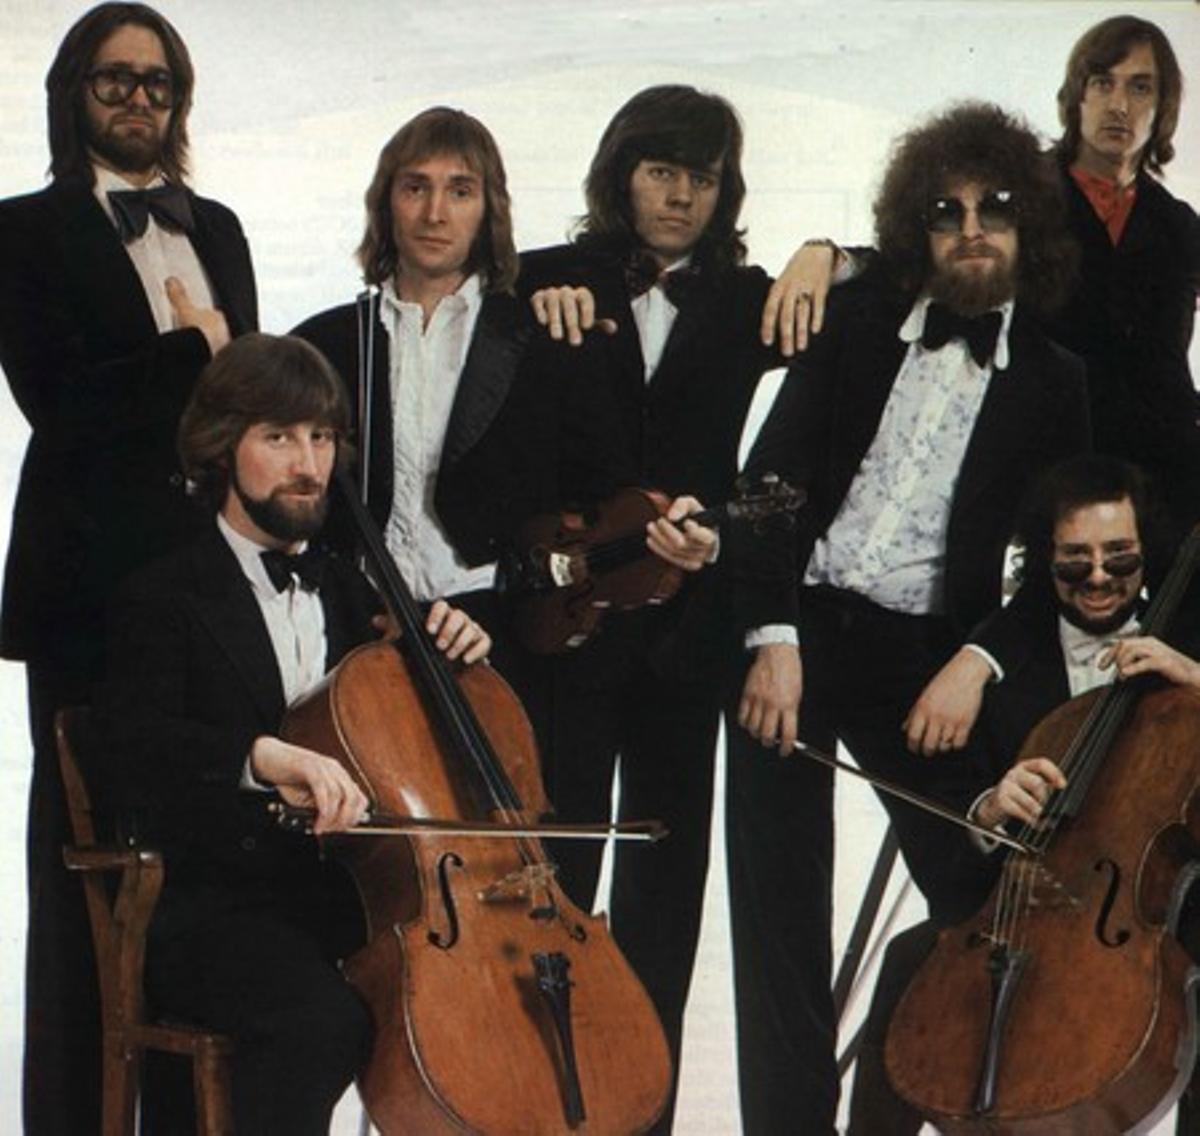 La Electric Light Orchestra, en una imagen promocional.